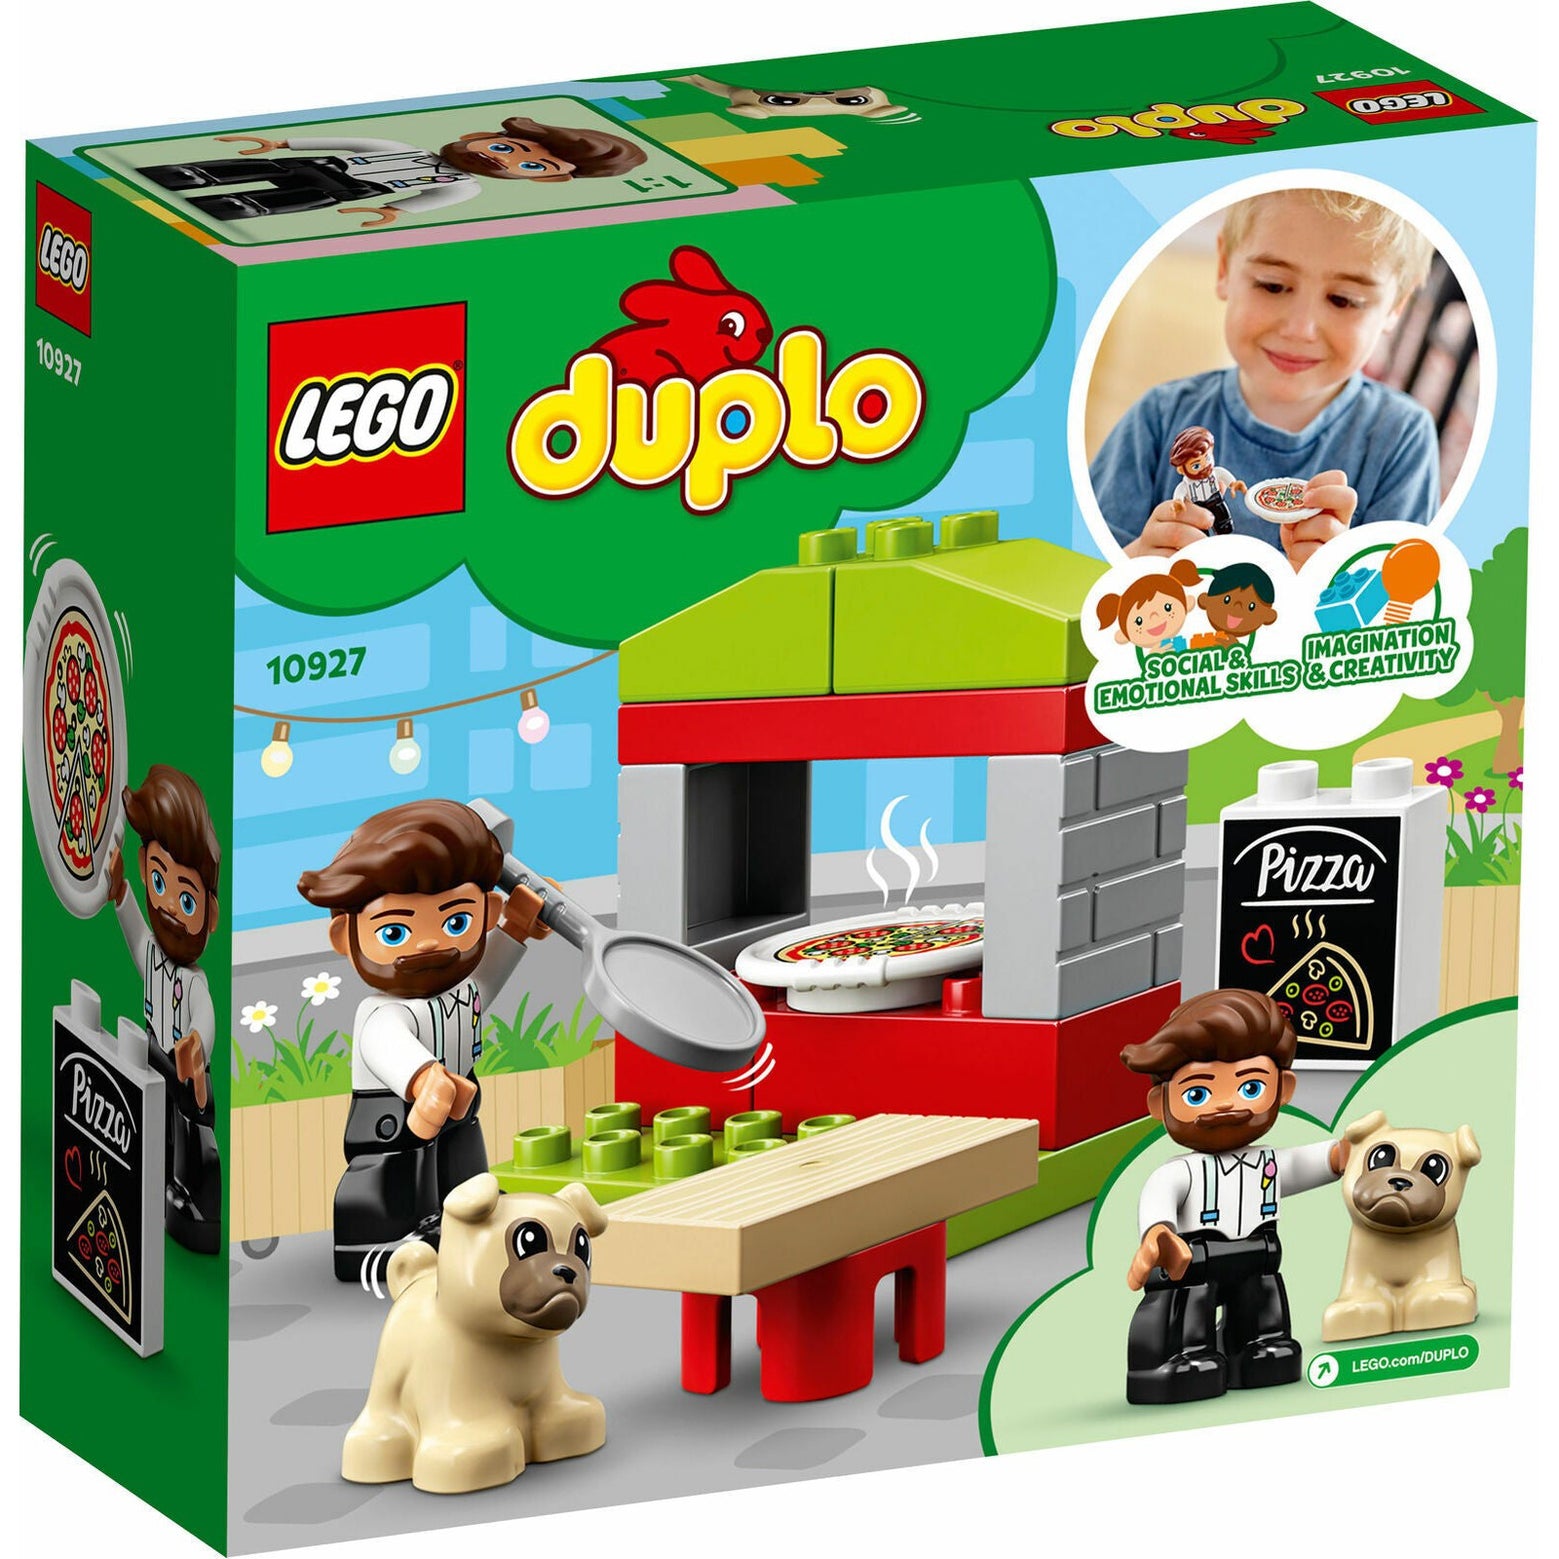 Lego Duplo 10927 Pizza Stand Set